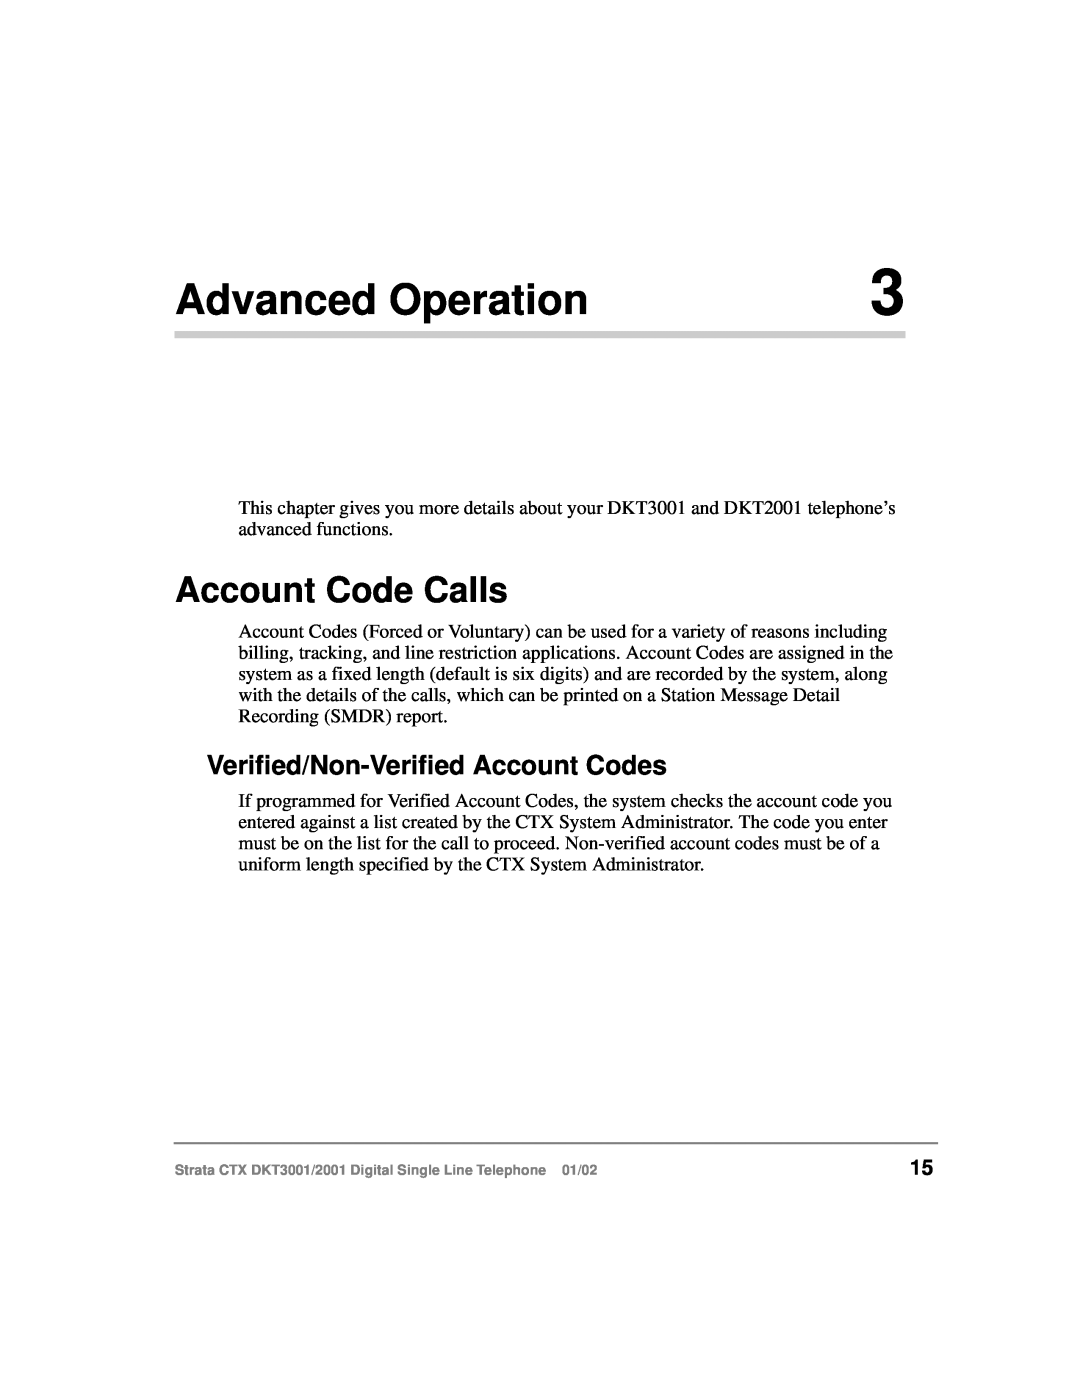 Toshiba 2001, DXT3001 manual Advanced Operation, Account Code Calls, Verified/Non-Verified Account Codes 